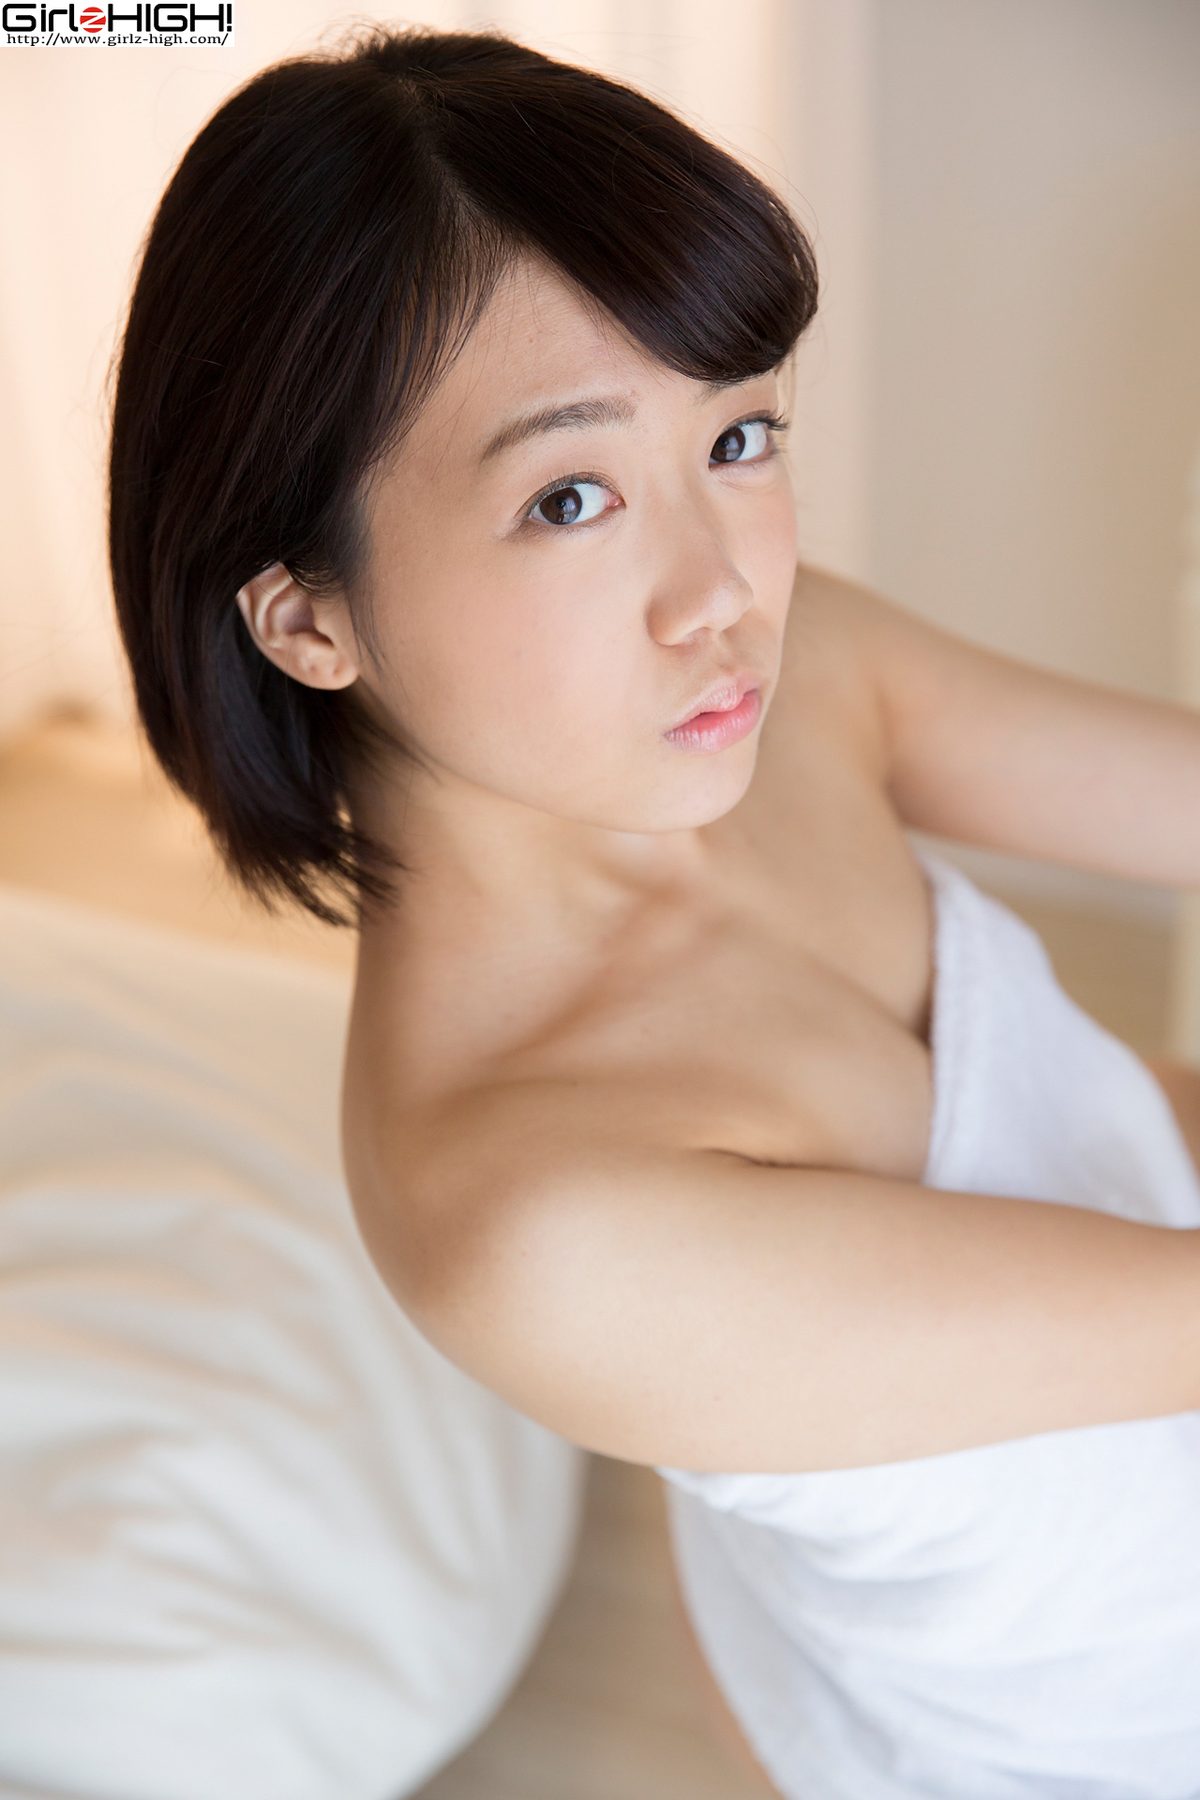 Girlz High Koharu Nishino bkoh_005_002 0017 7011146394.jpg